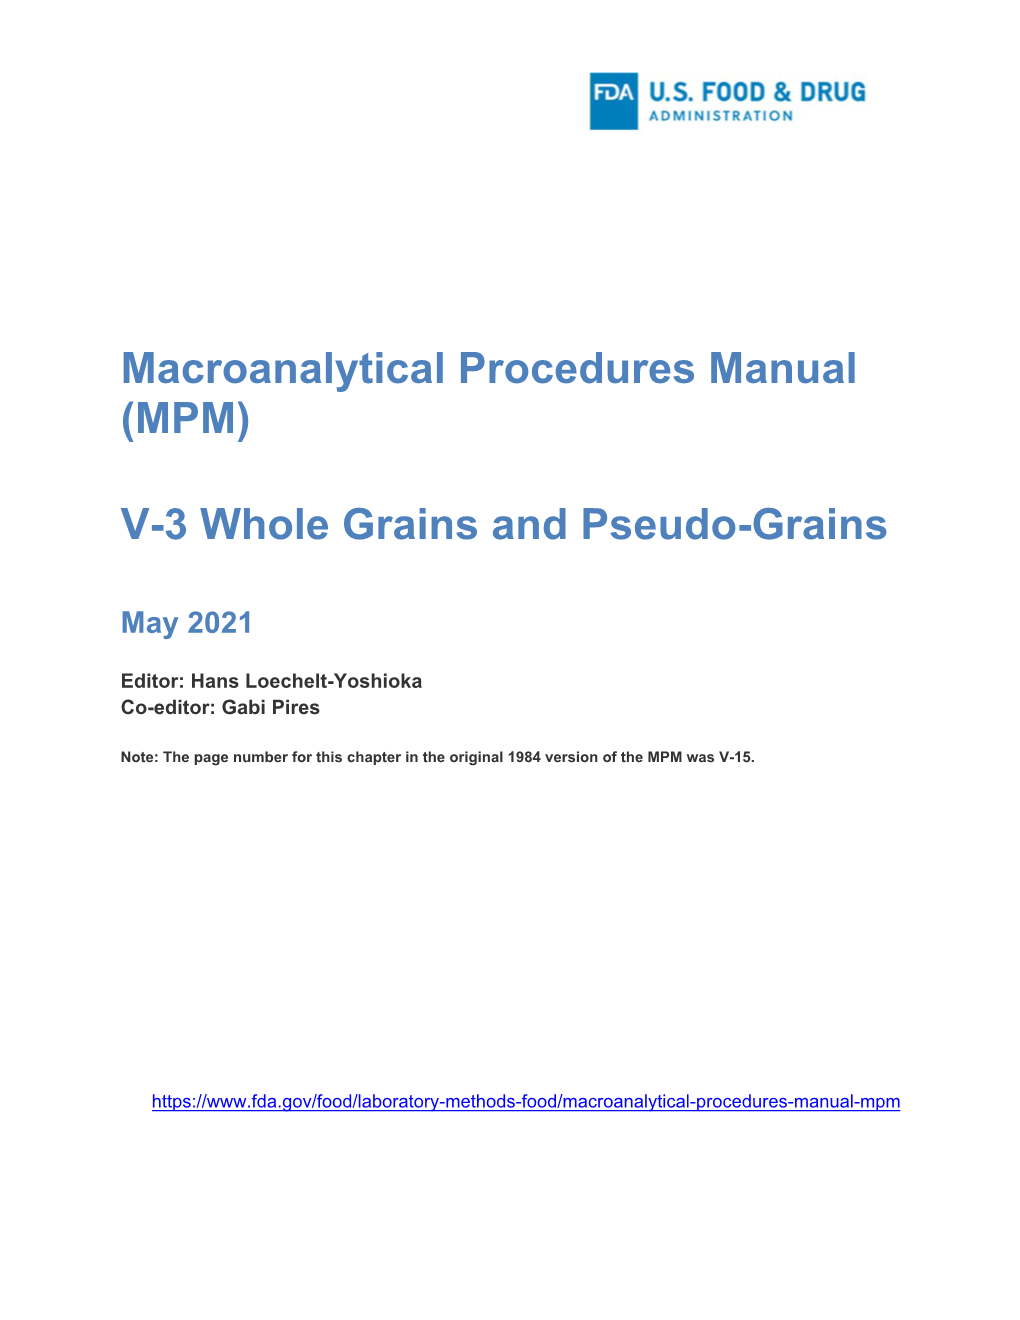 V-3 Whole Grains and Pseudo-Grains